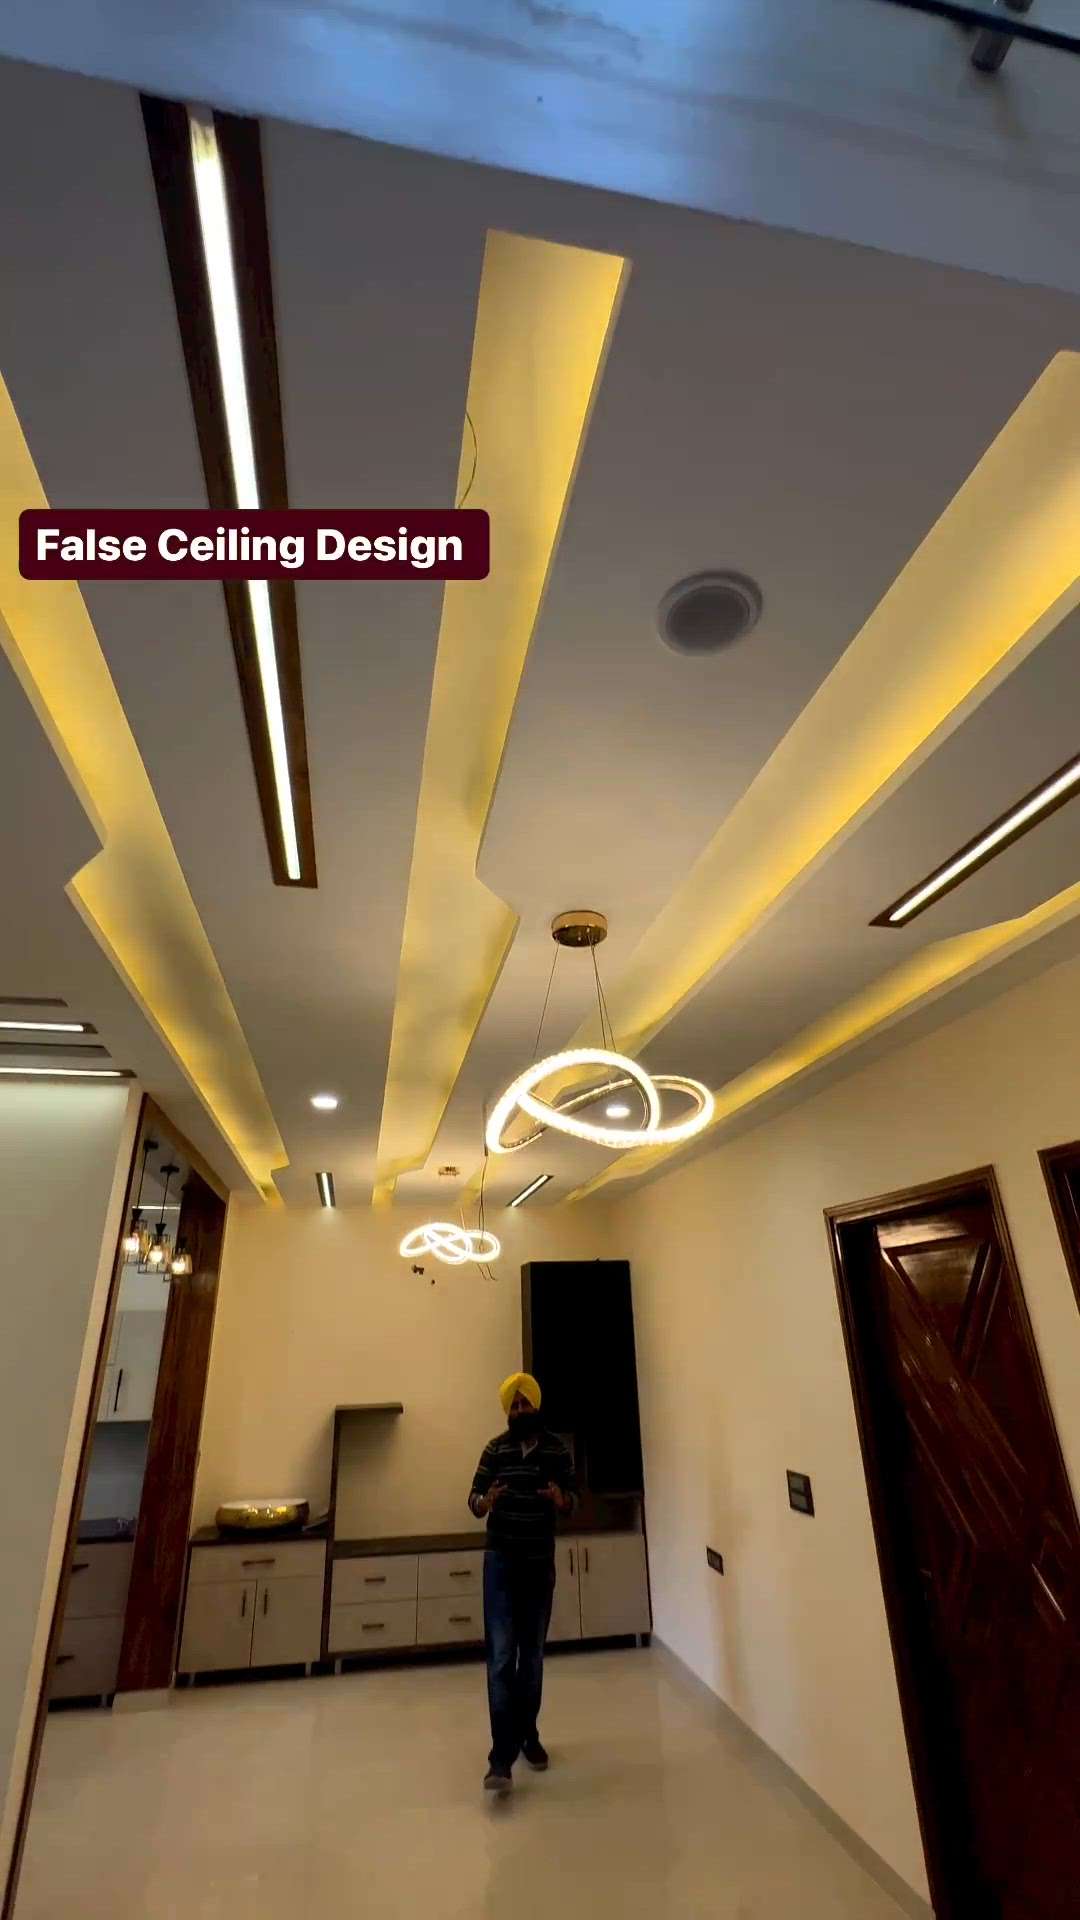 #FalseCeiling  #Gypsumceiling  #Popceiling  #Woodenceiling  #Pvcceiling  #Bedroomceiling  #Ceilinglights  #Livingroomceiling